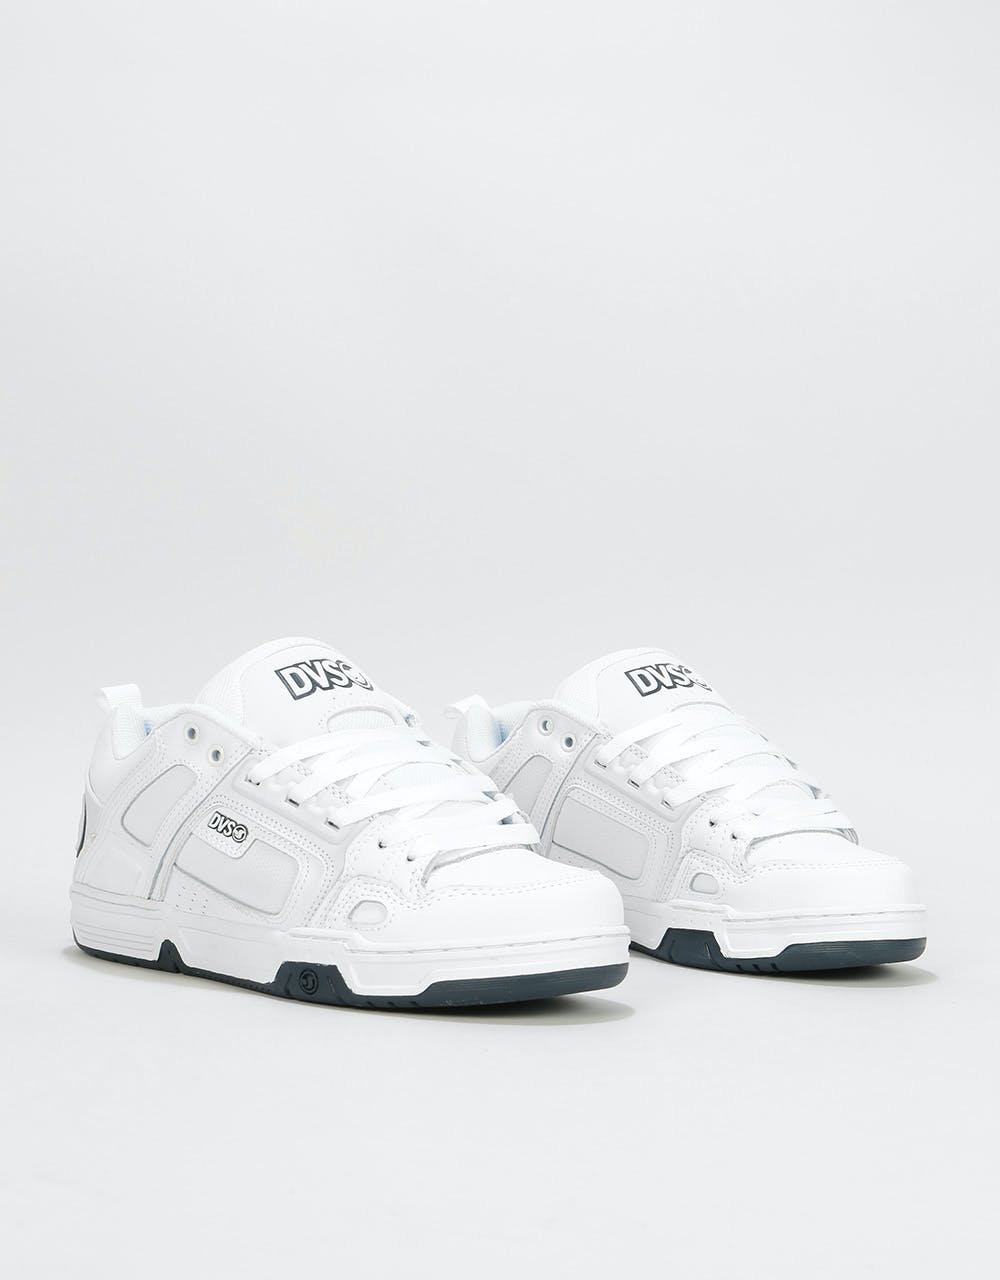 DVS Commanche Skate Shoes - White/Navy Nubuck